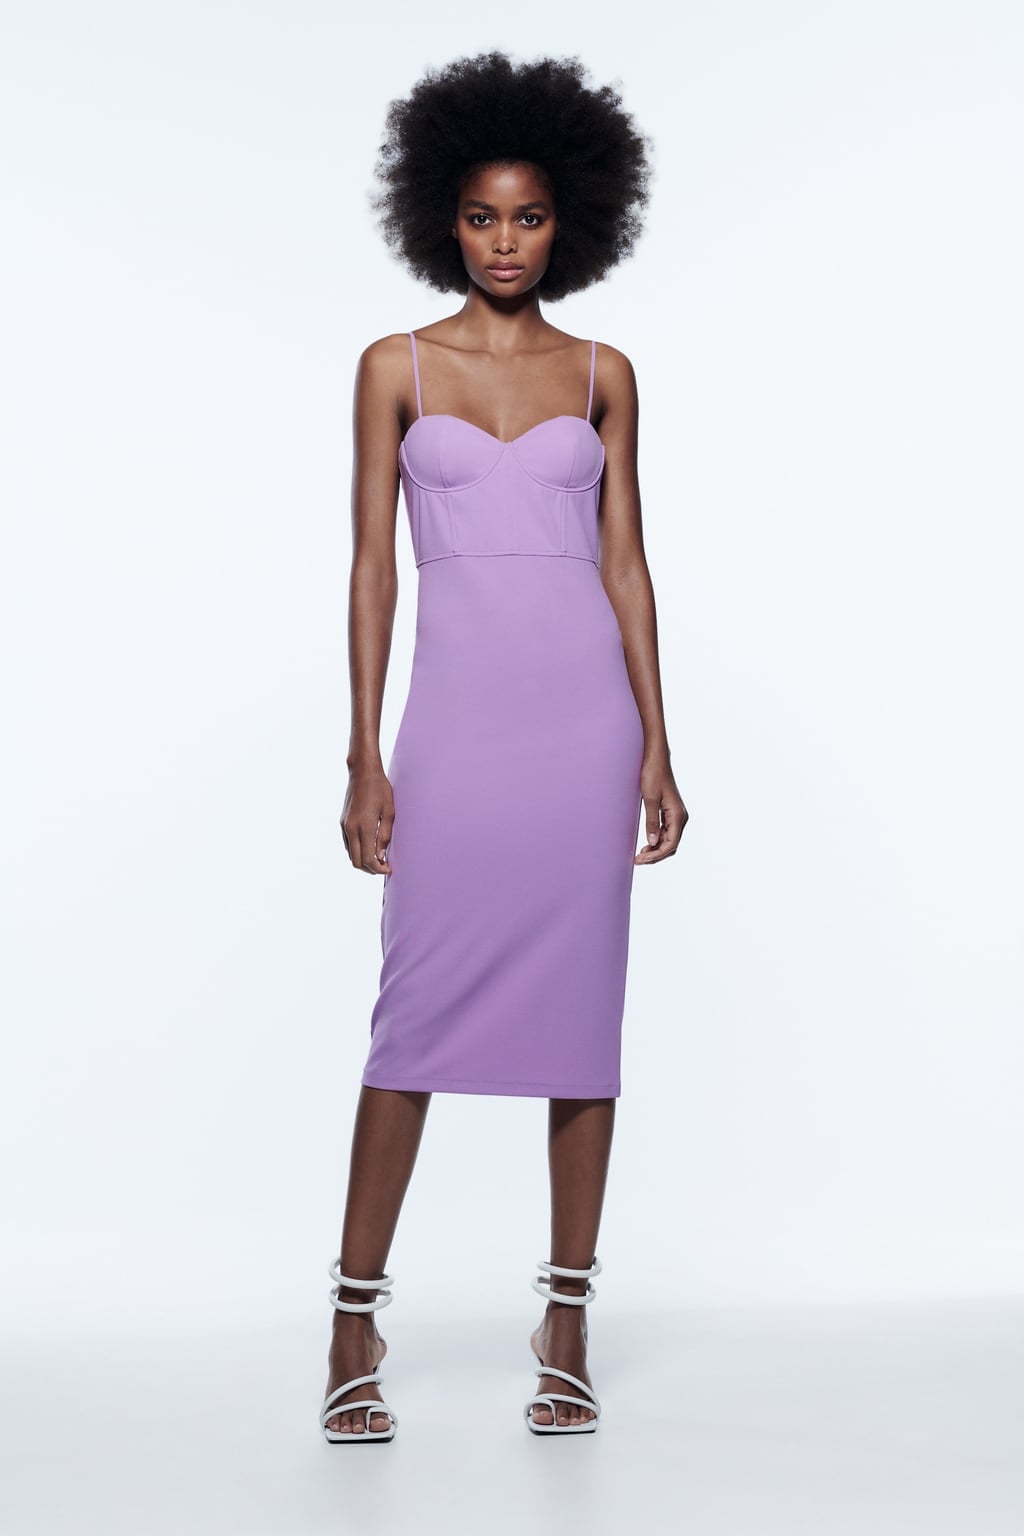 A Colourful Dress: Zara Corset Style Dress